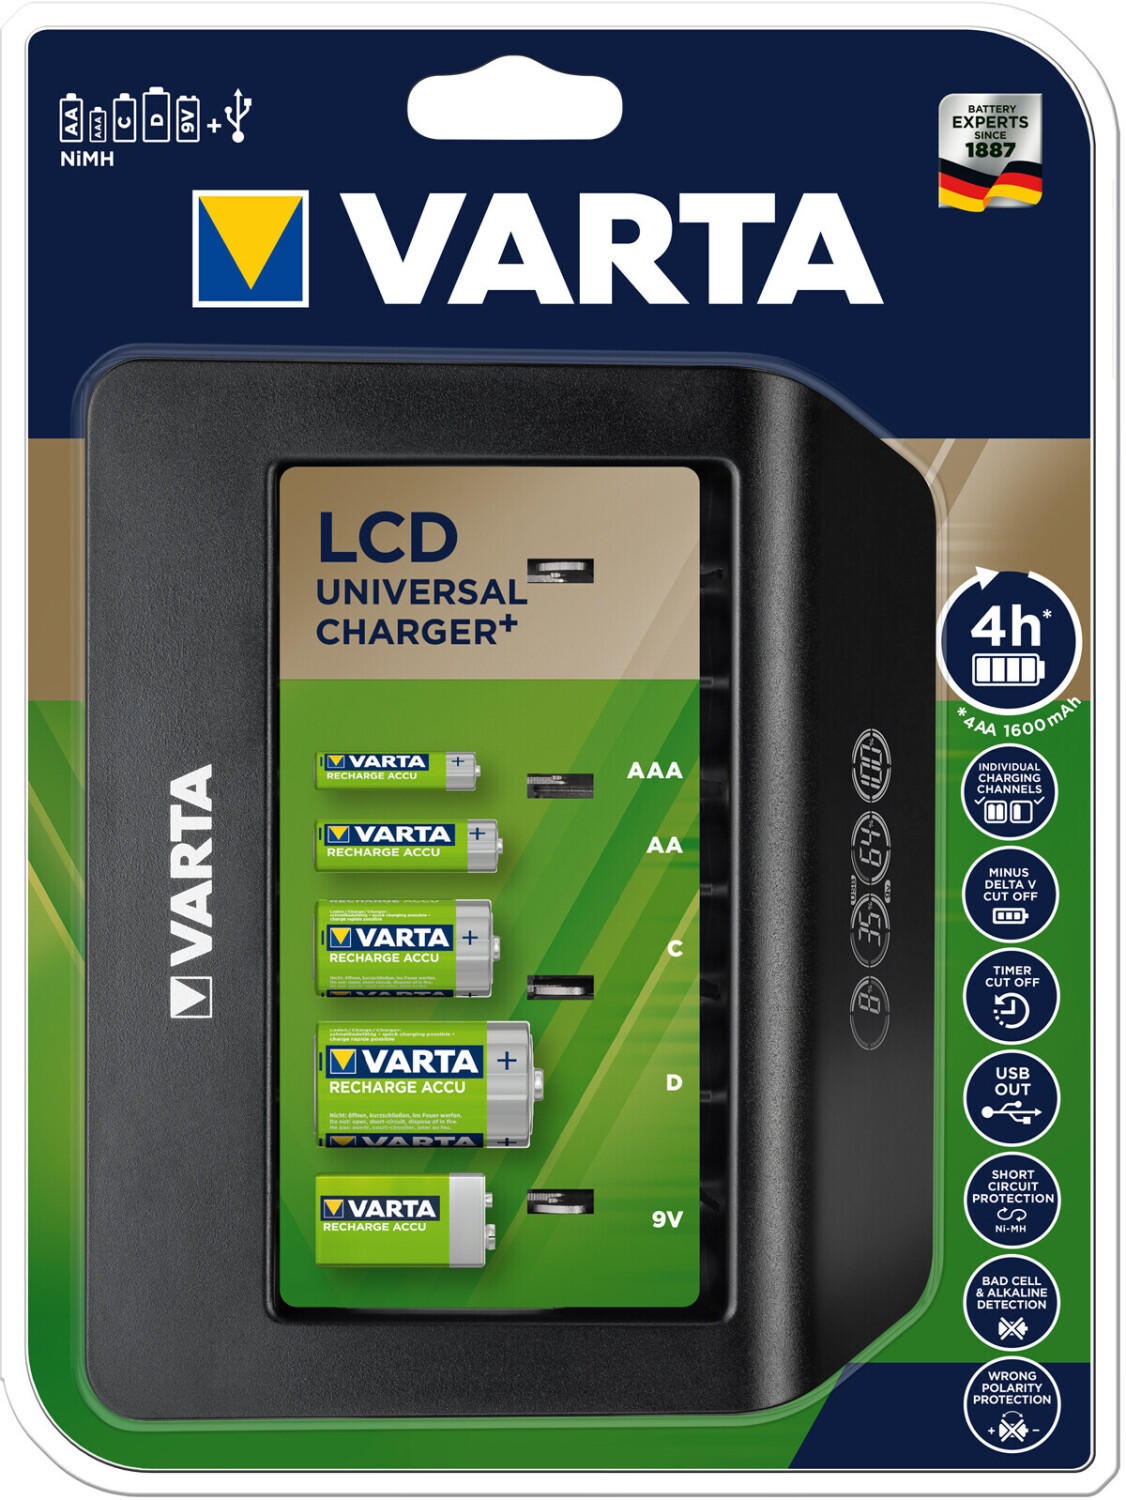 Varta LCD Universal Charger+ (57688101401) Test TOP Angebote ab 22,96 €  (Juni 2023)